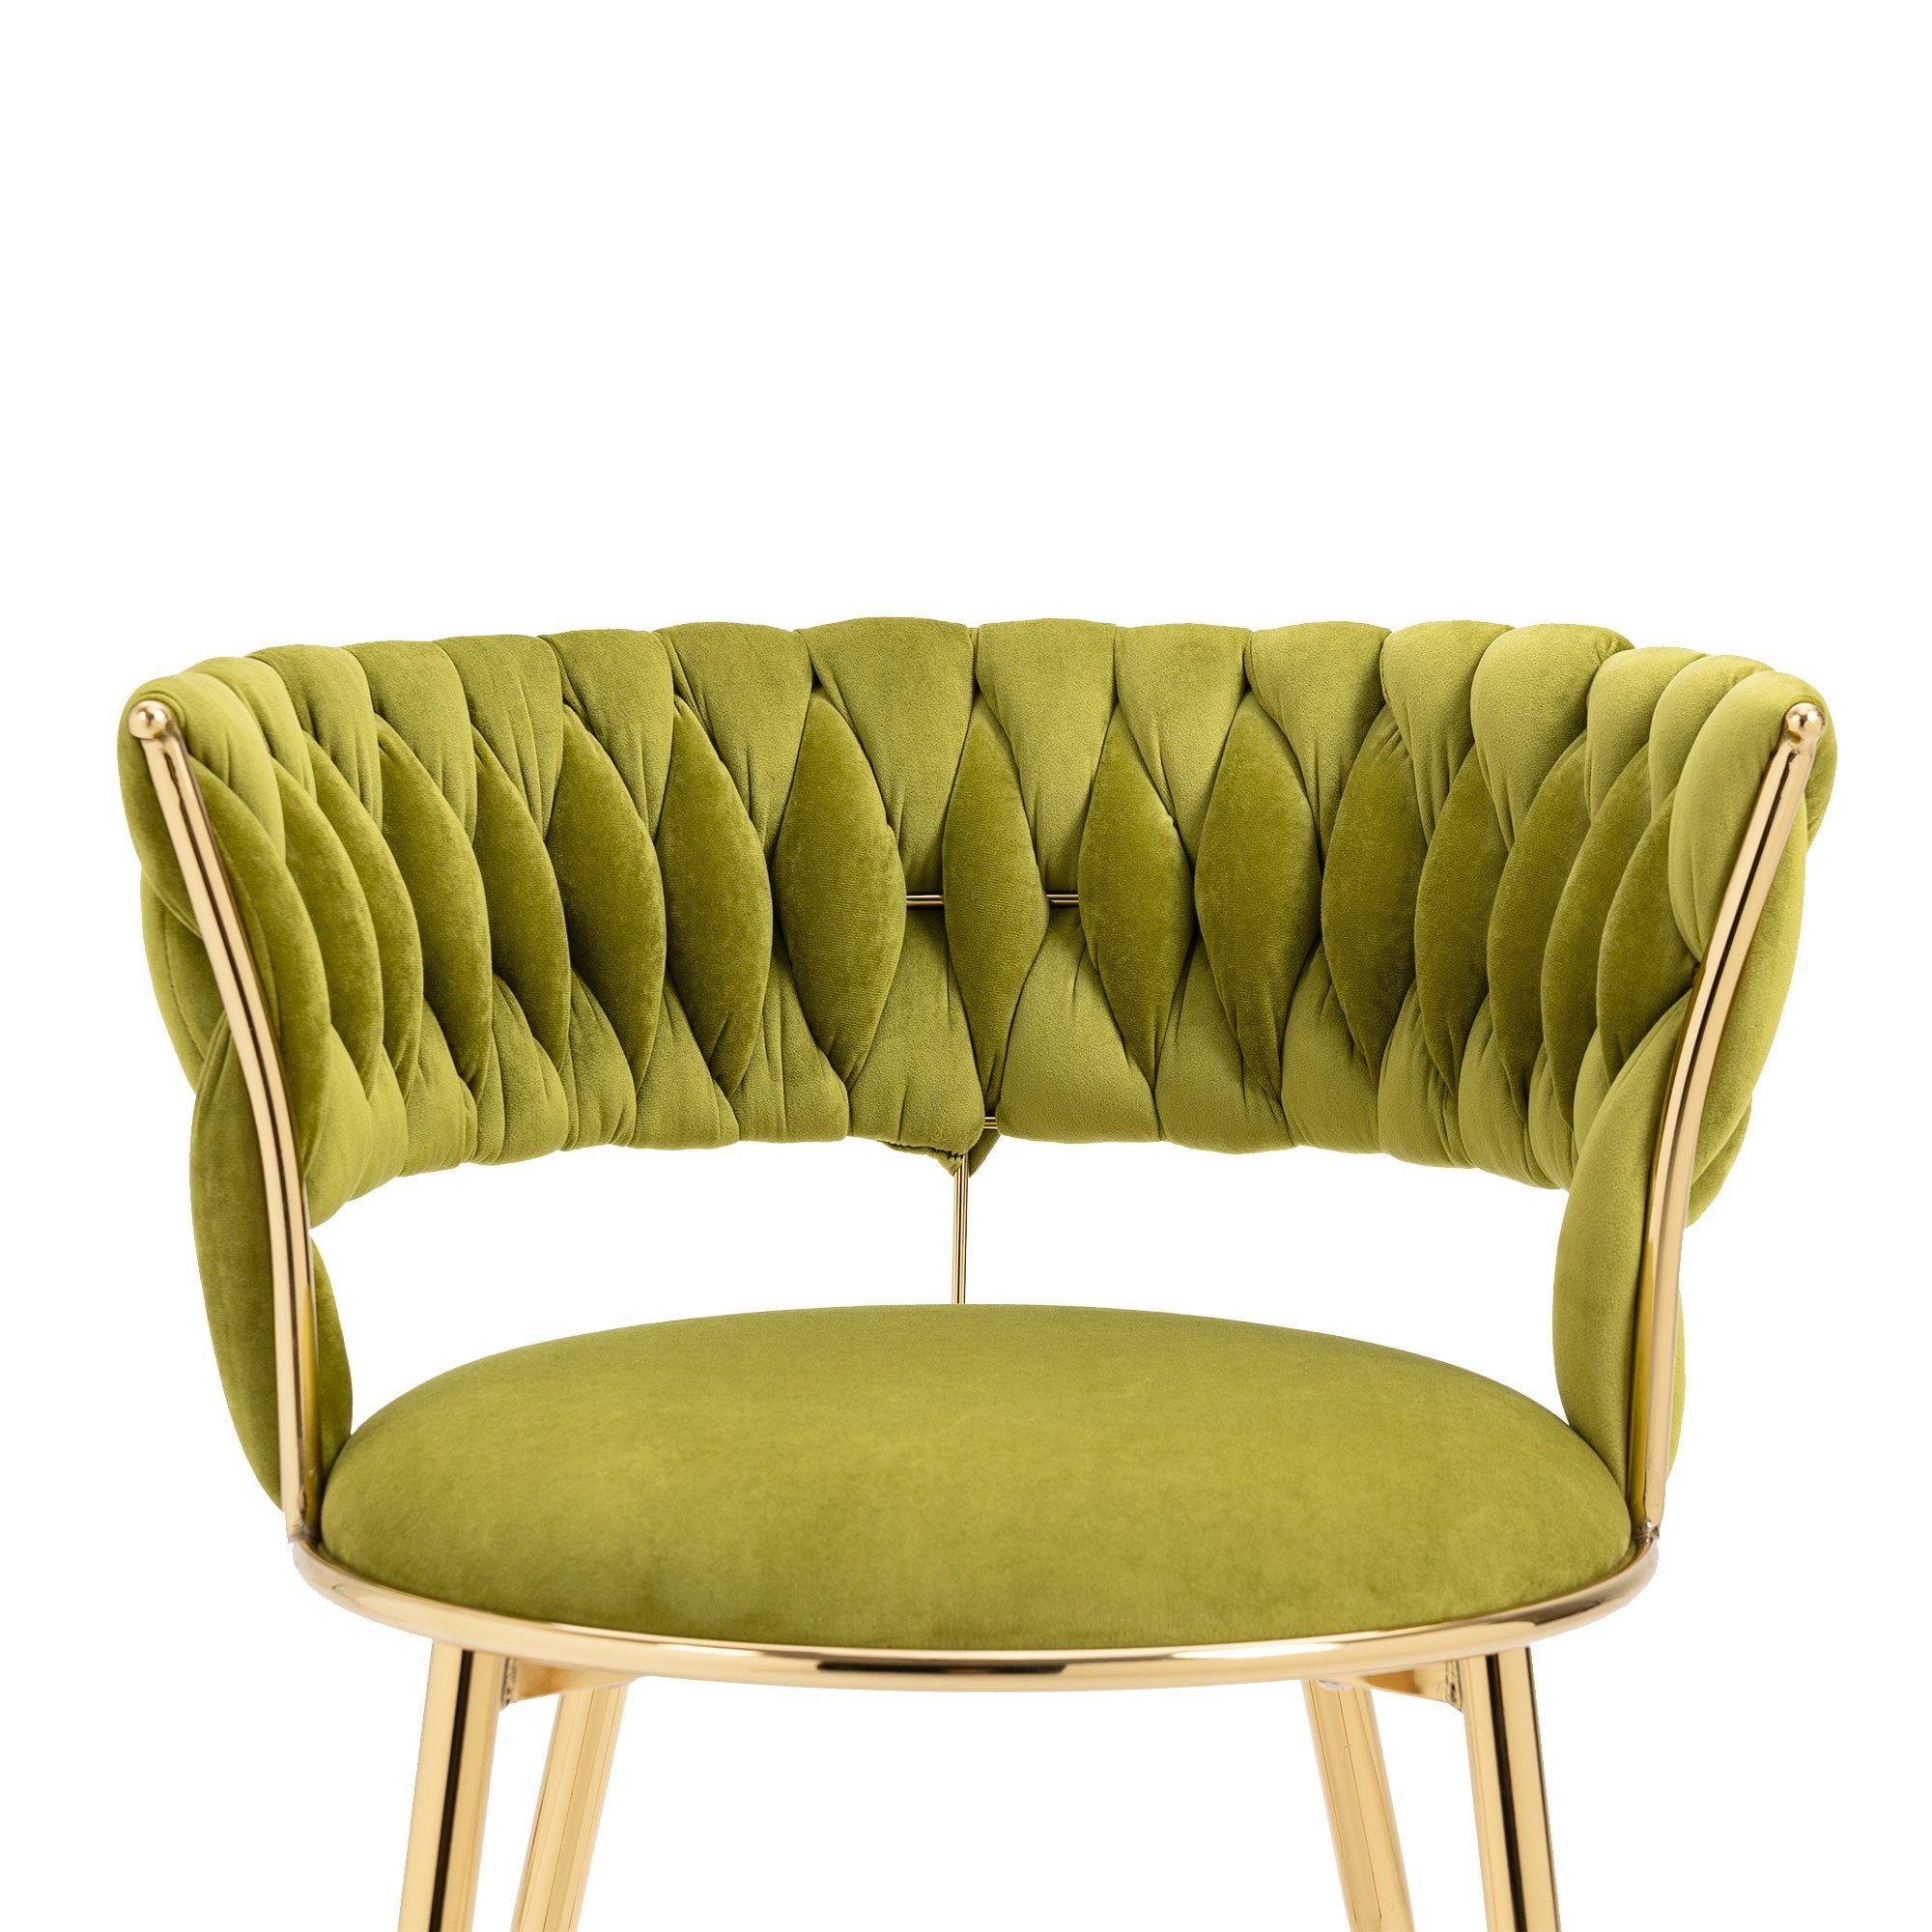 Odikalo Esszimmerstuhl Loungesessel Grün 2 mehrere goldene Stück Metallfüße Form runde Samt Farben